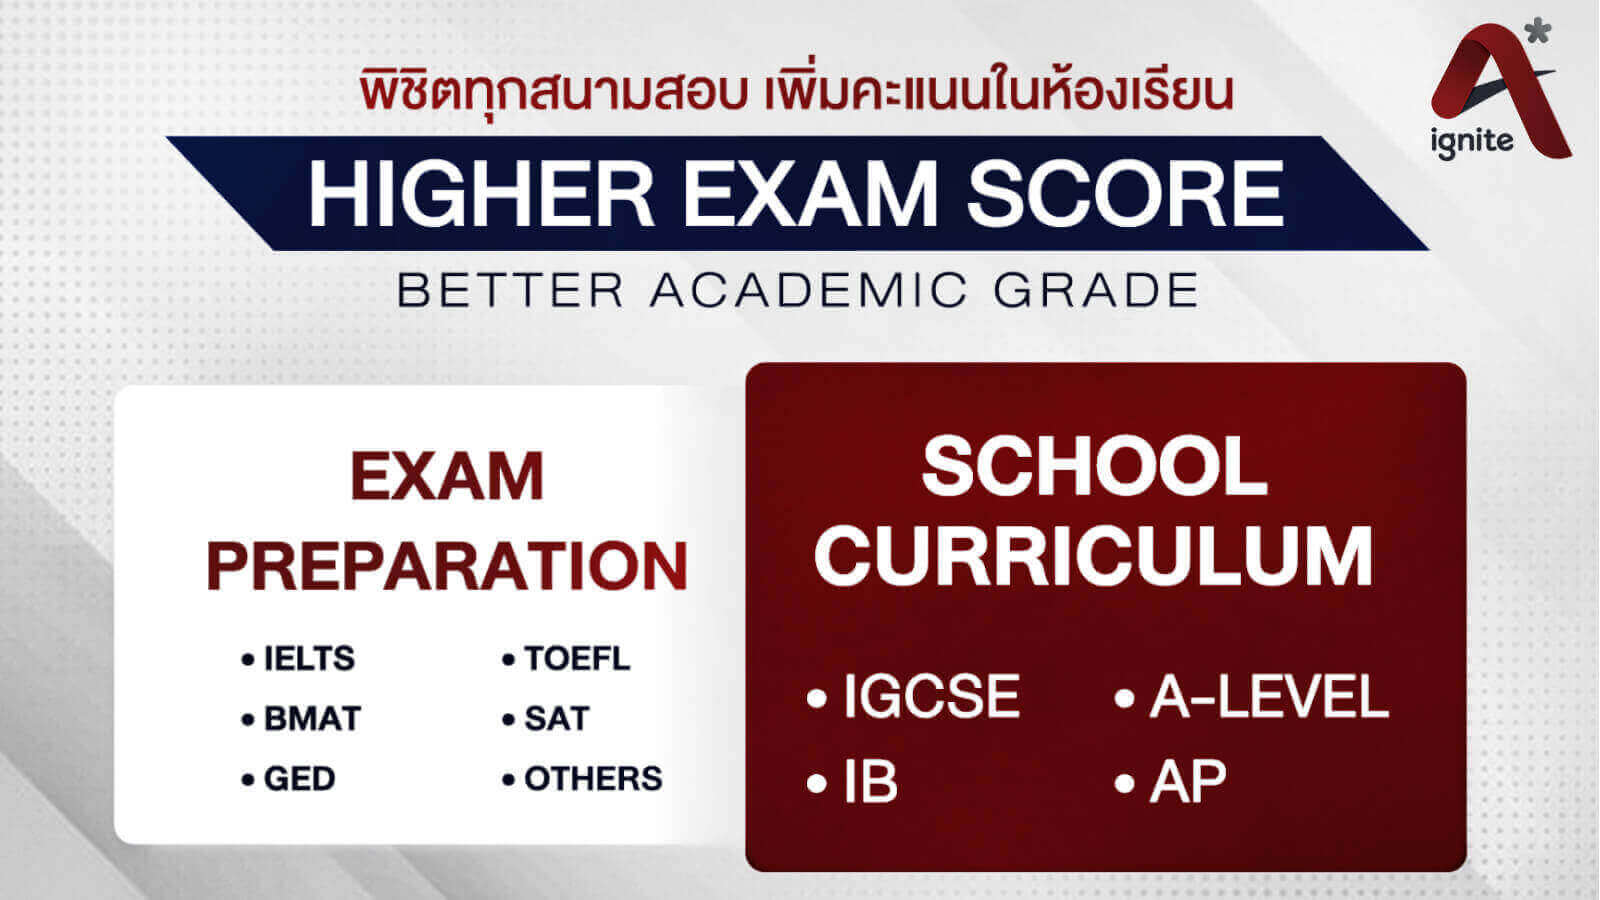 Higher Exam Score - ignite A Star - International - Banner